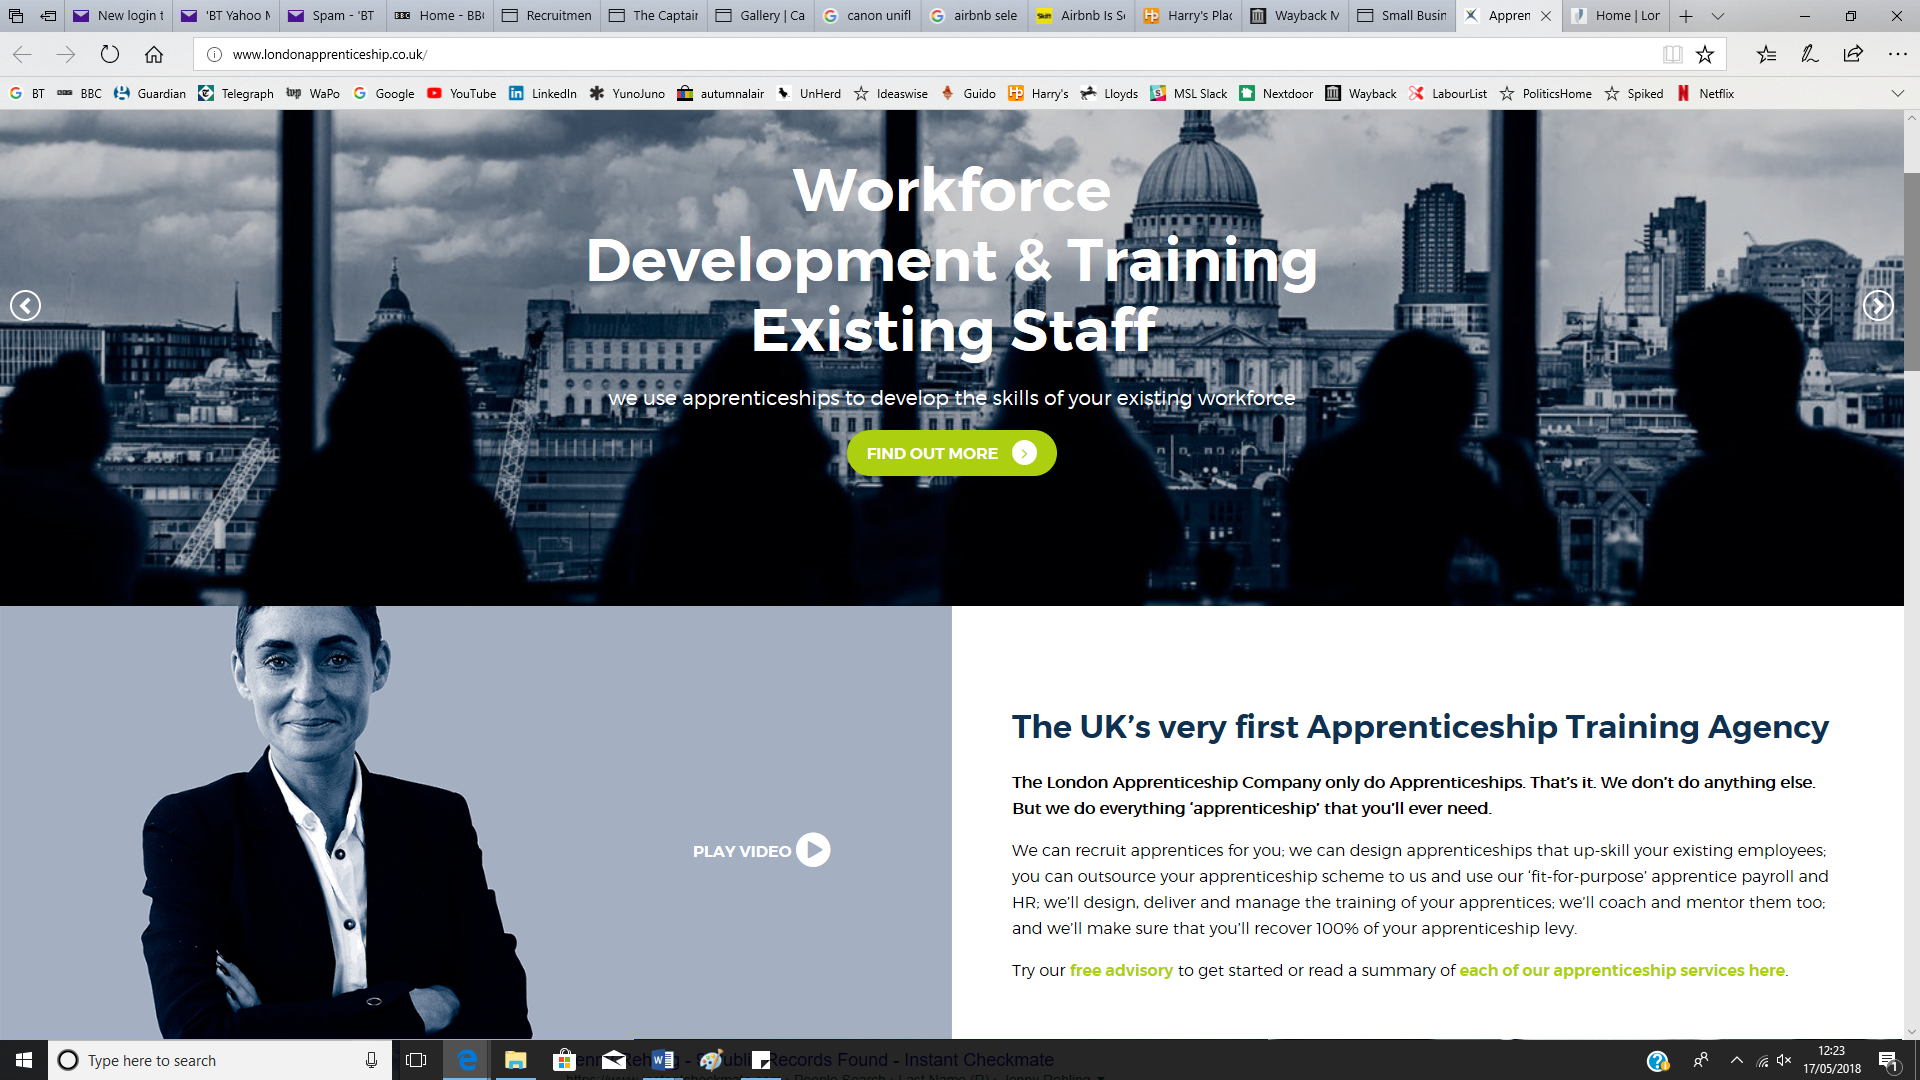 London Apprenticeship Company website